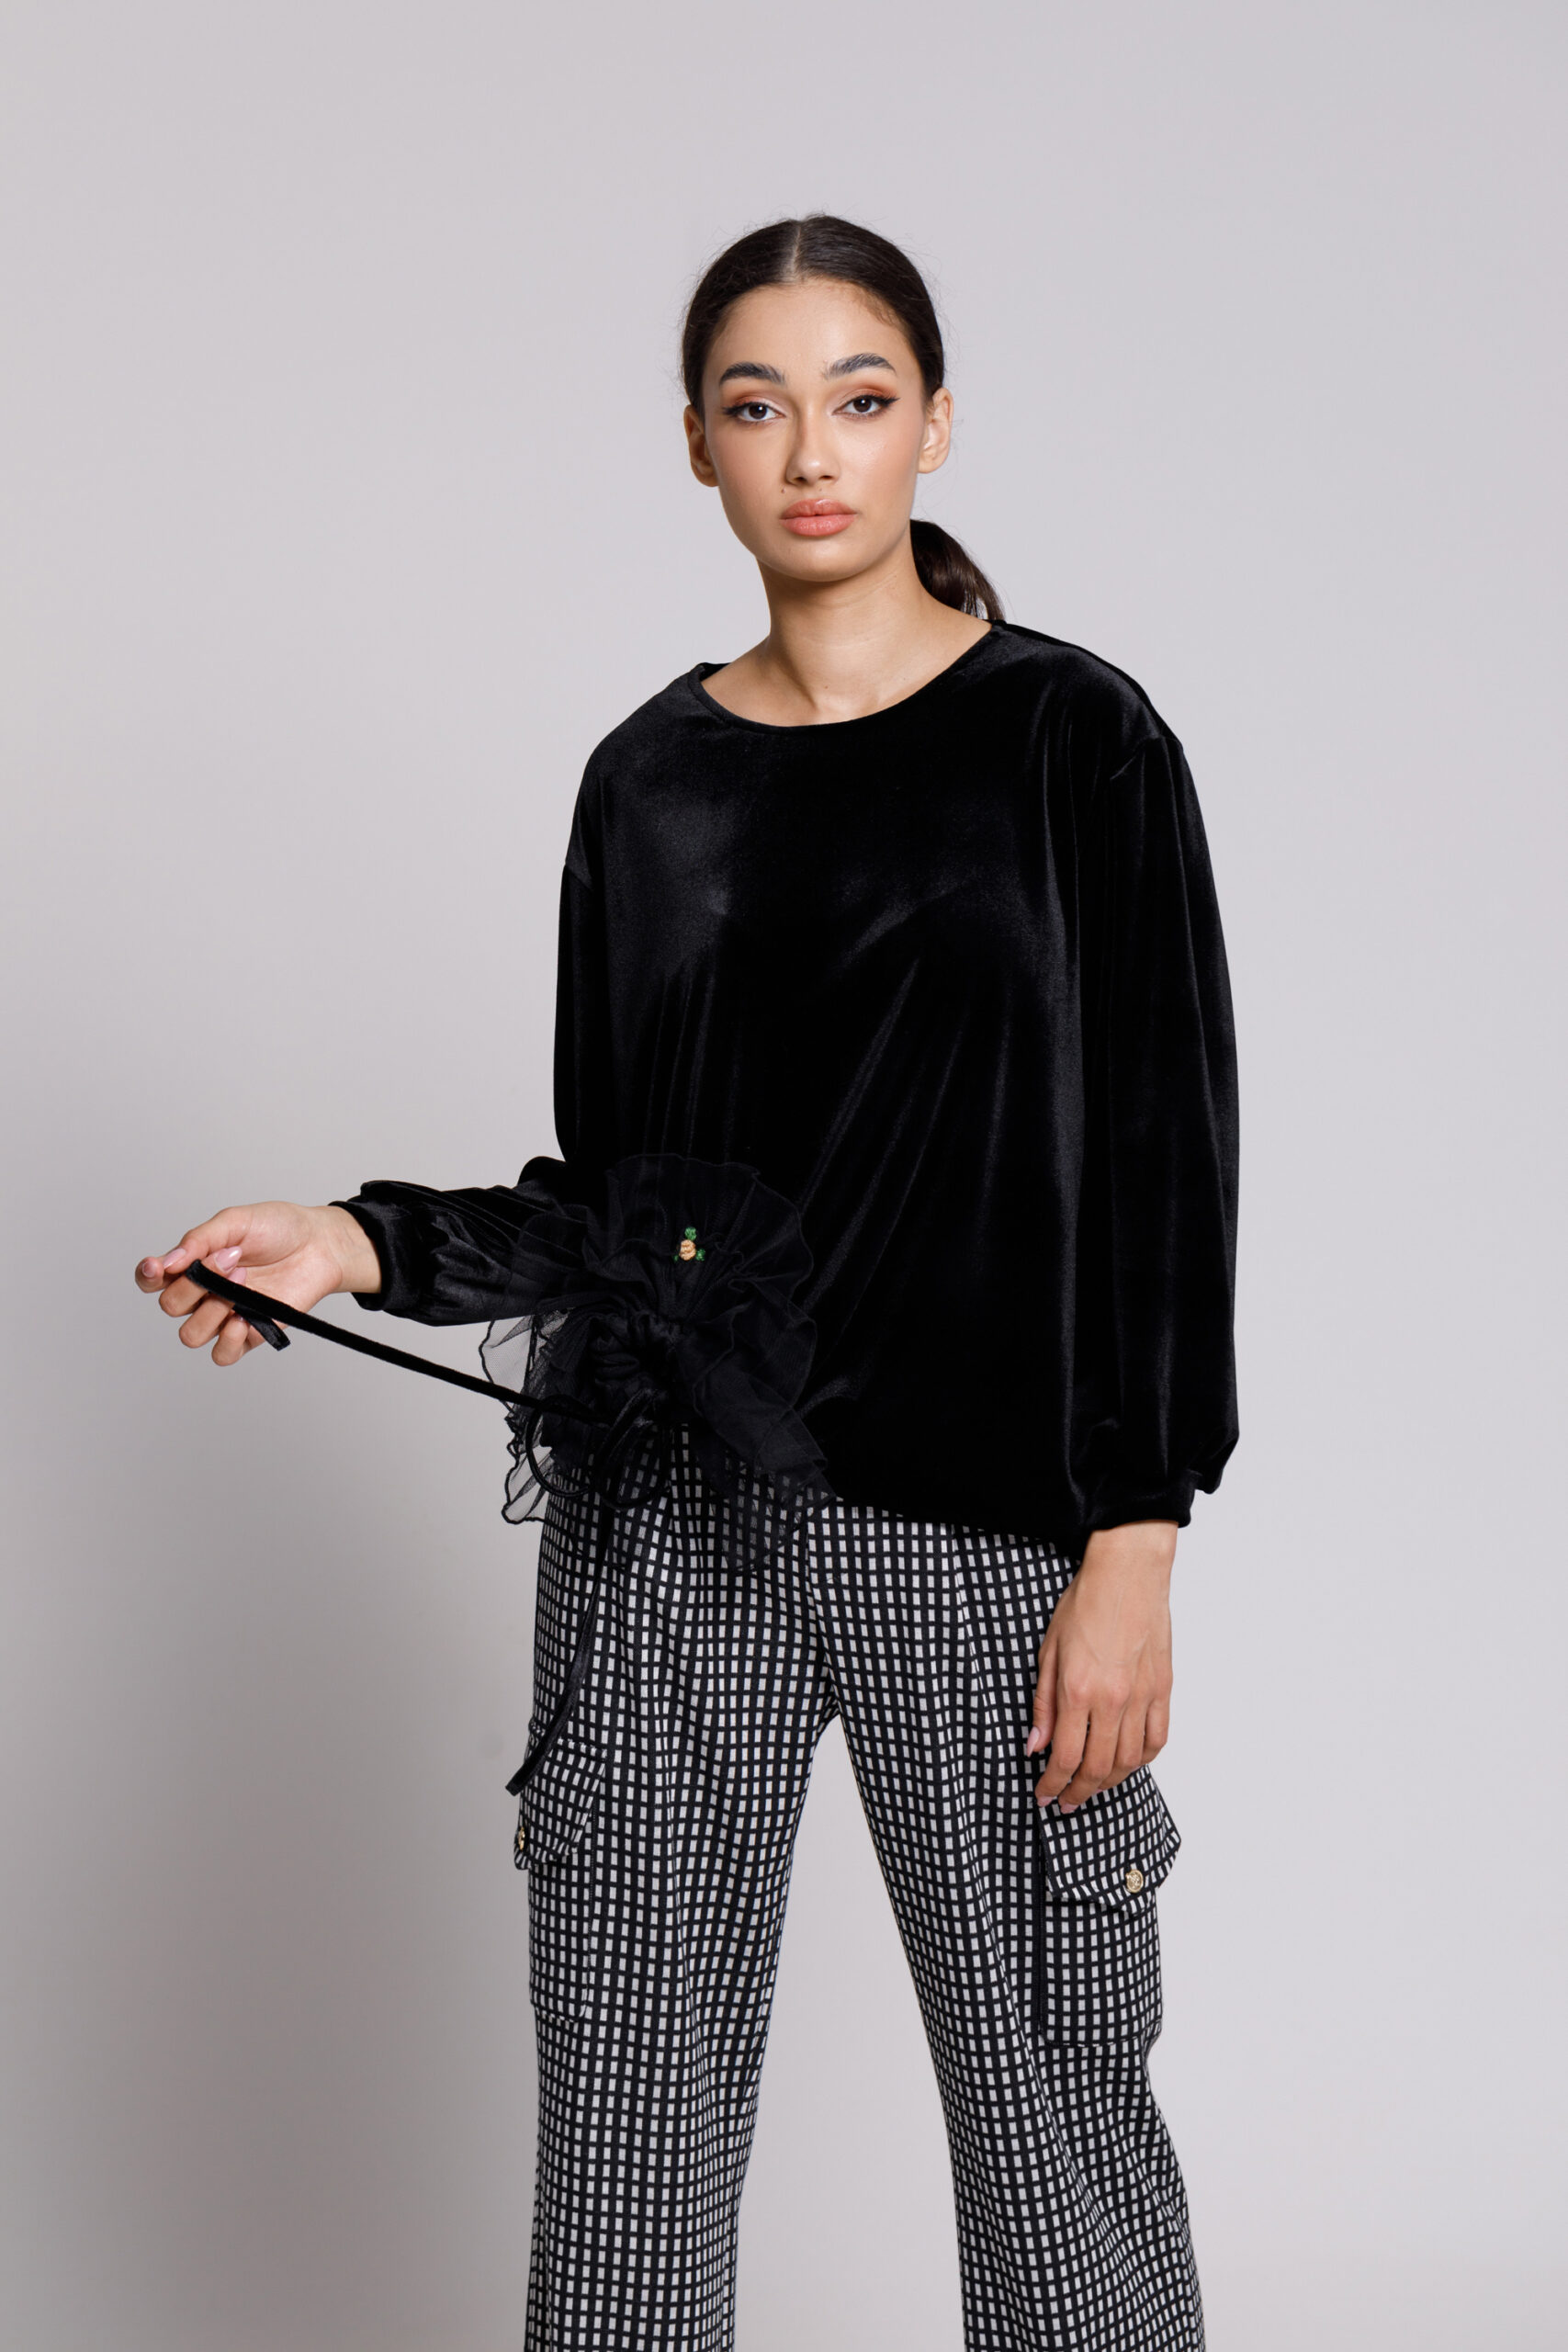 EVE casual black velvet blouse. Natural fabrics, original design, handmade embroidery